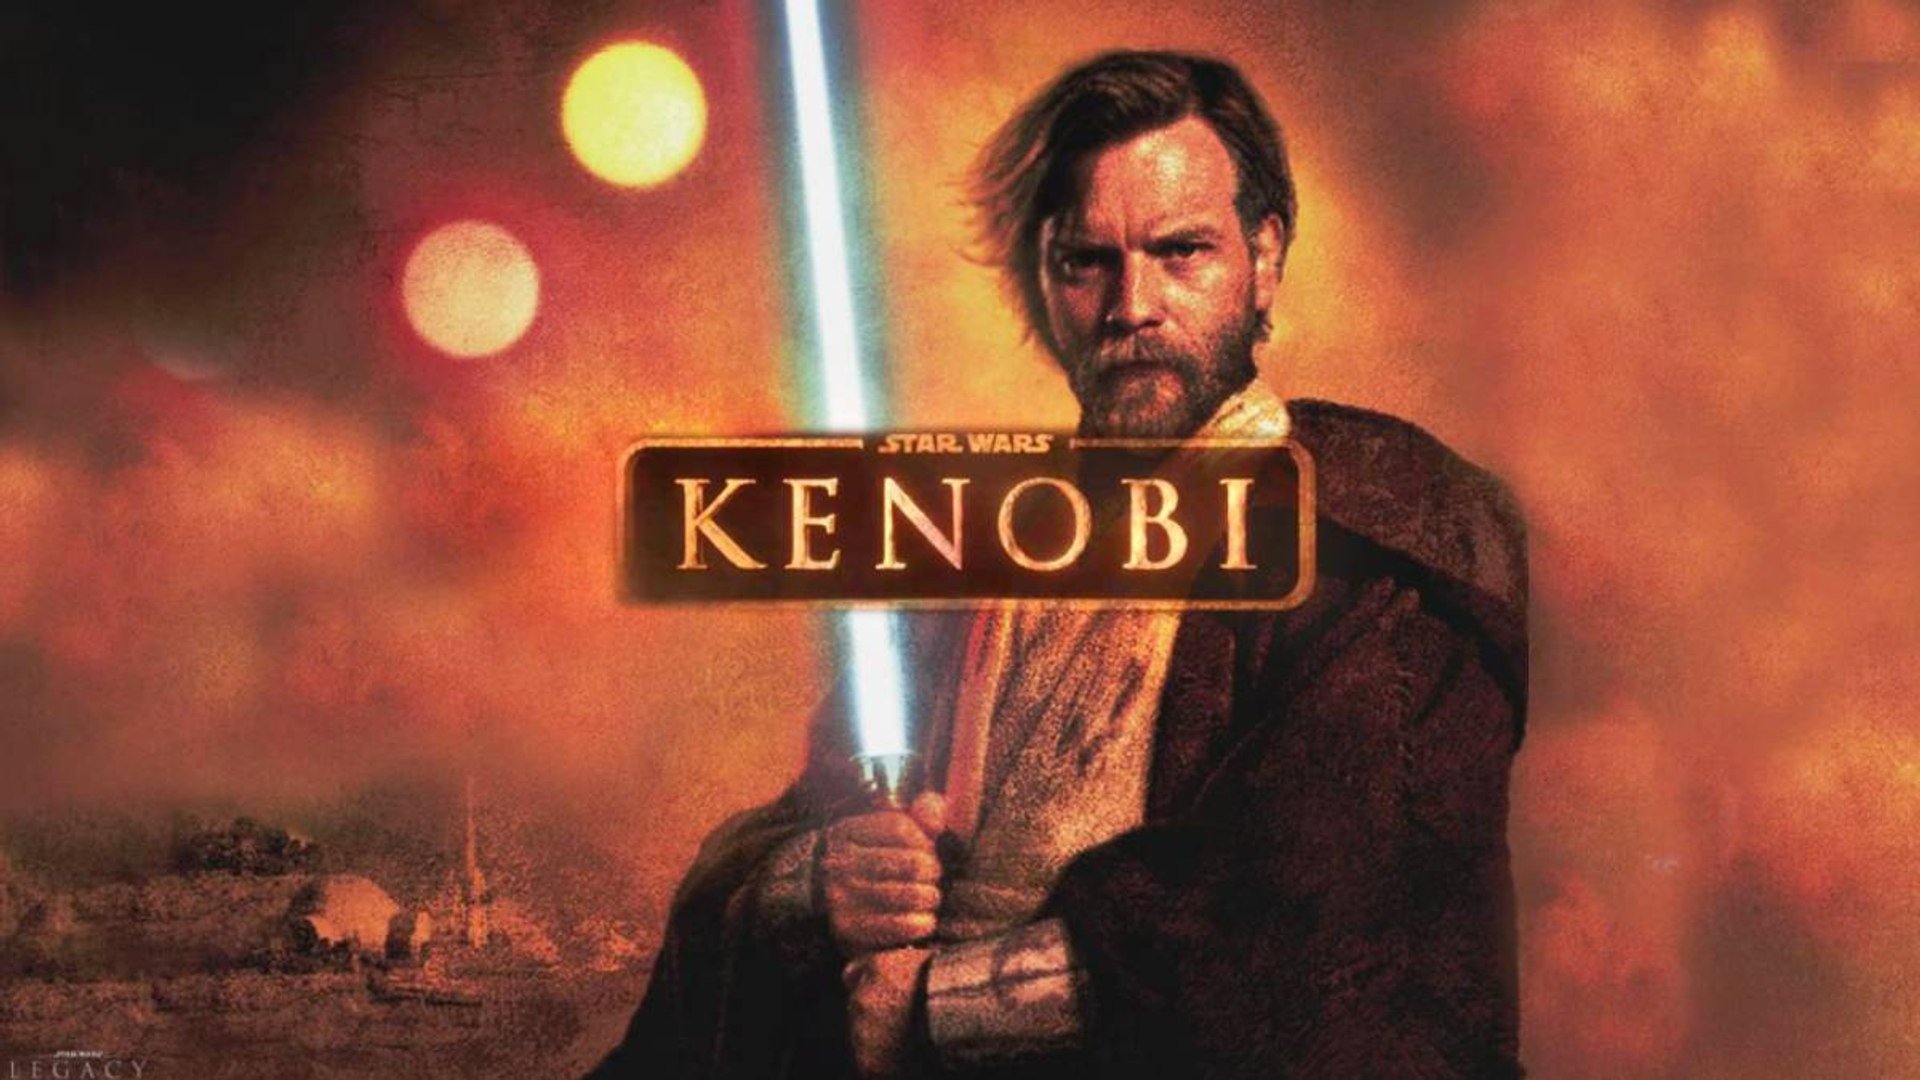 Obi-Wan Kenobi Series Release Date Confirmed For May 2022